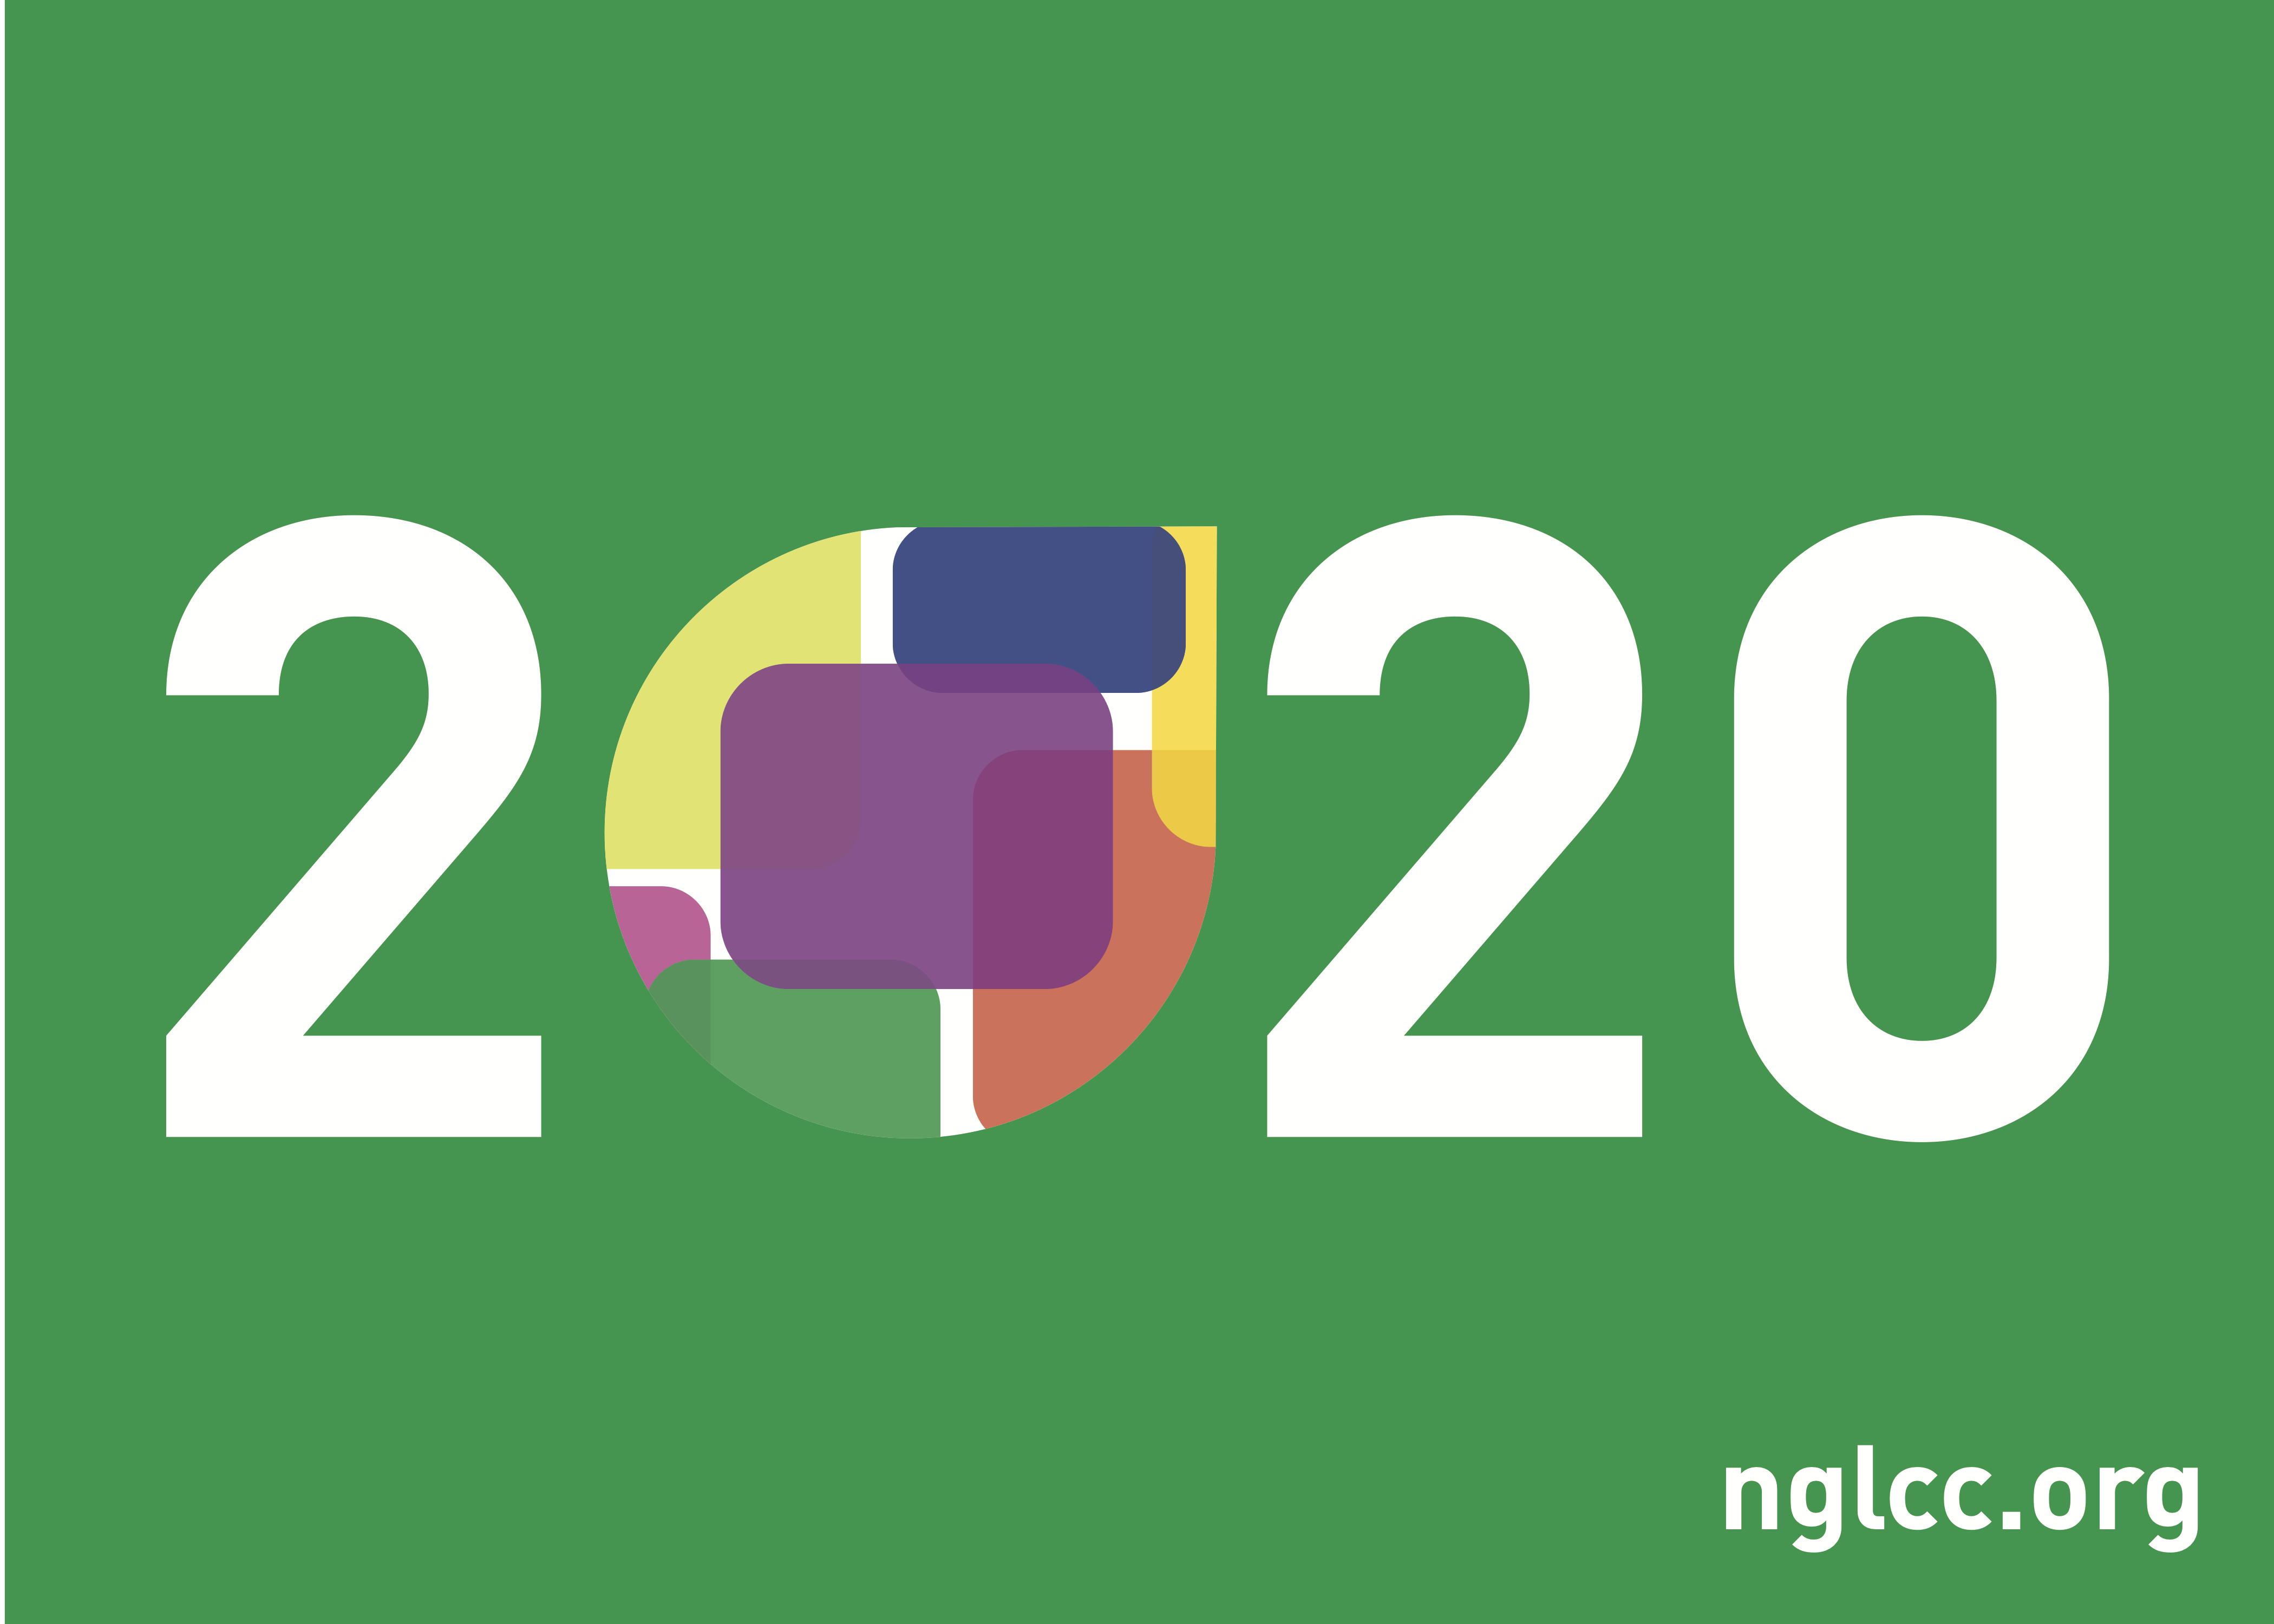 NGLCC Logo - NGLCC | 2020 NGLCC International Business & Leadership Conference ...